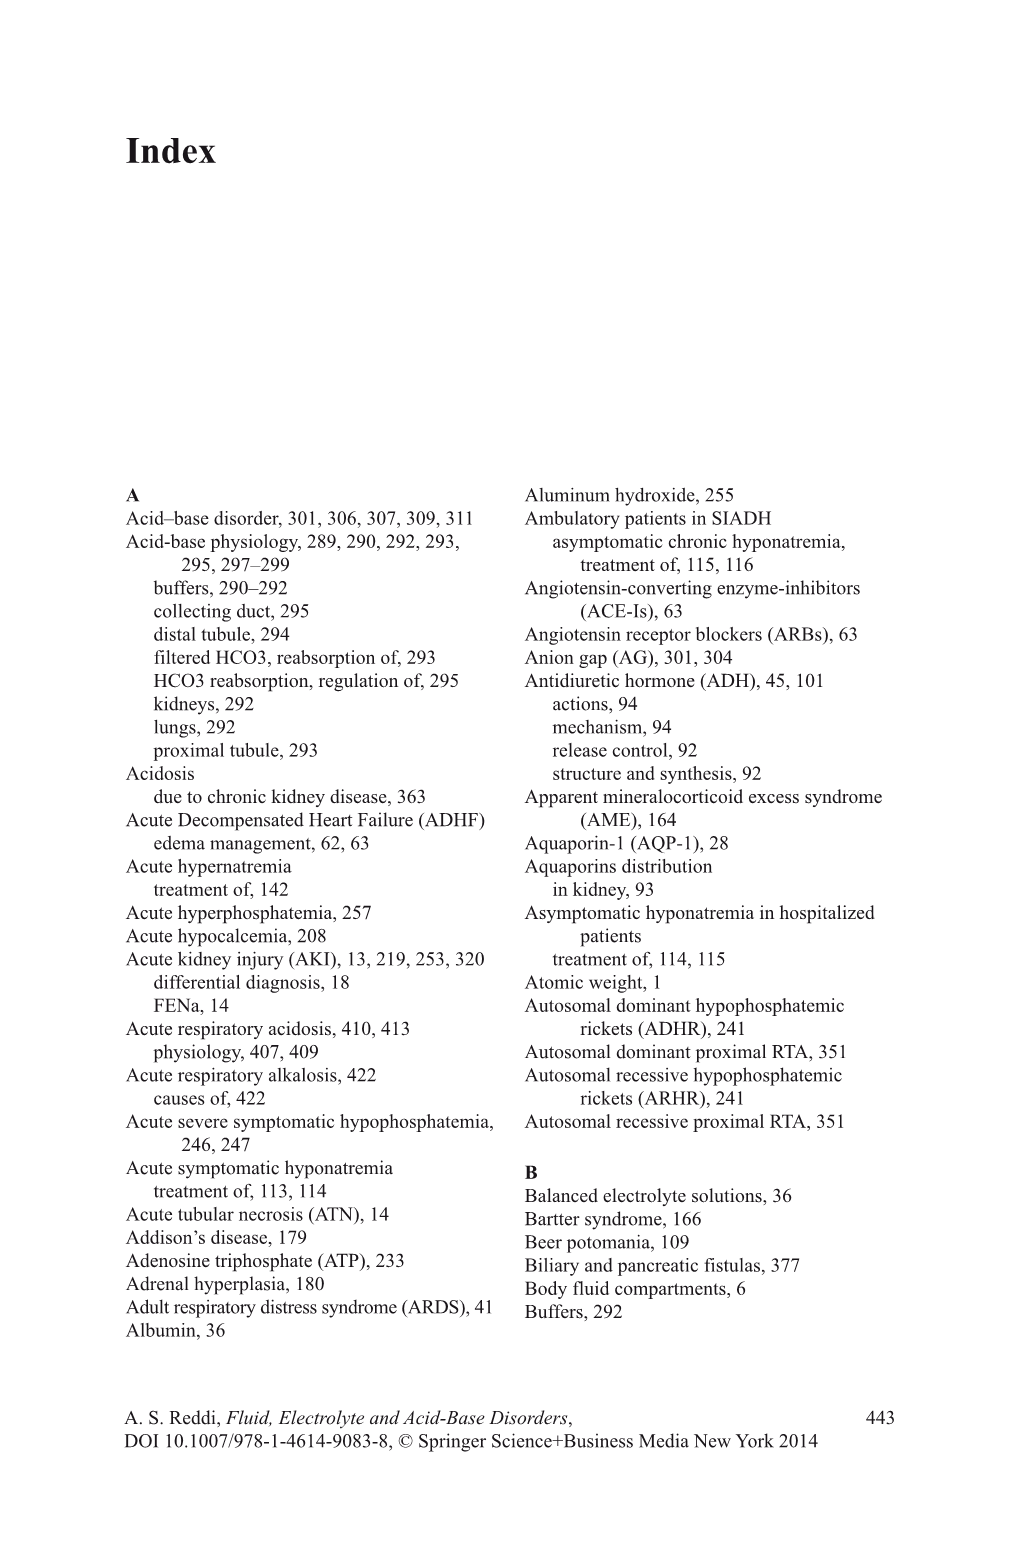 443 A. S. Reddi, Fluid, Electrolyte and Acid-Base Disorders, DOI